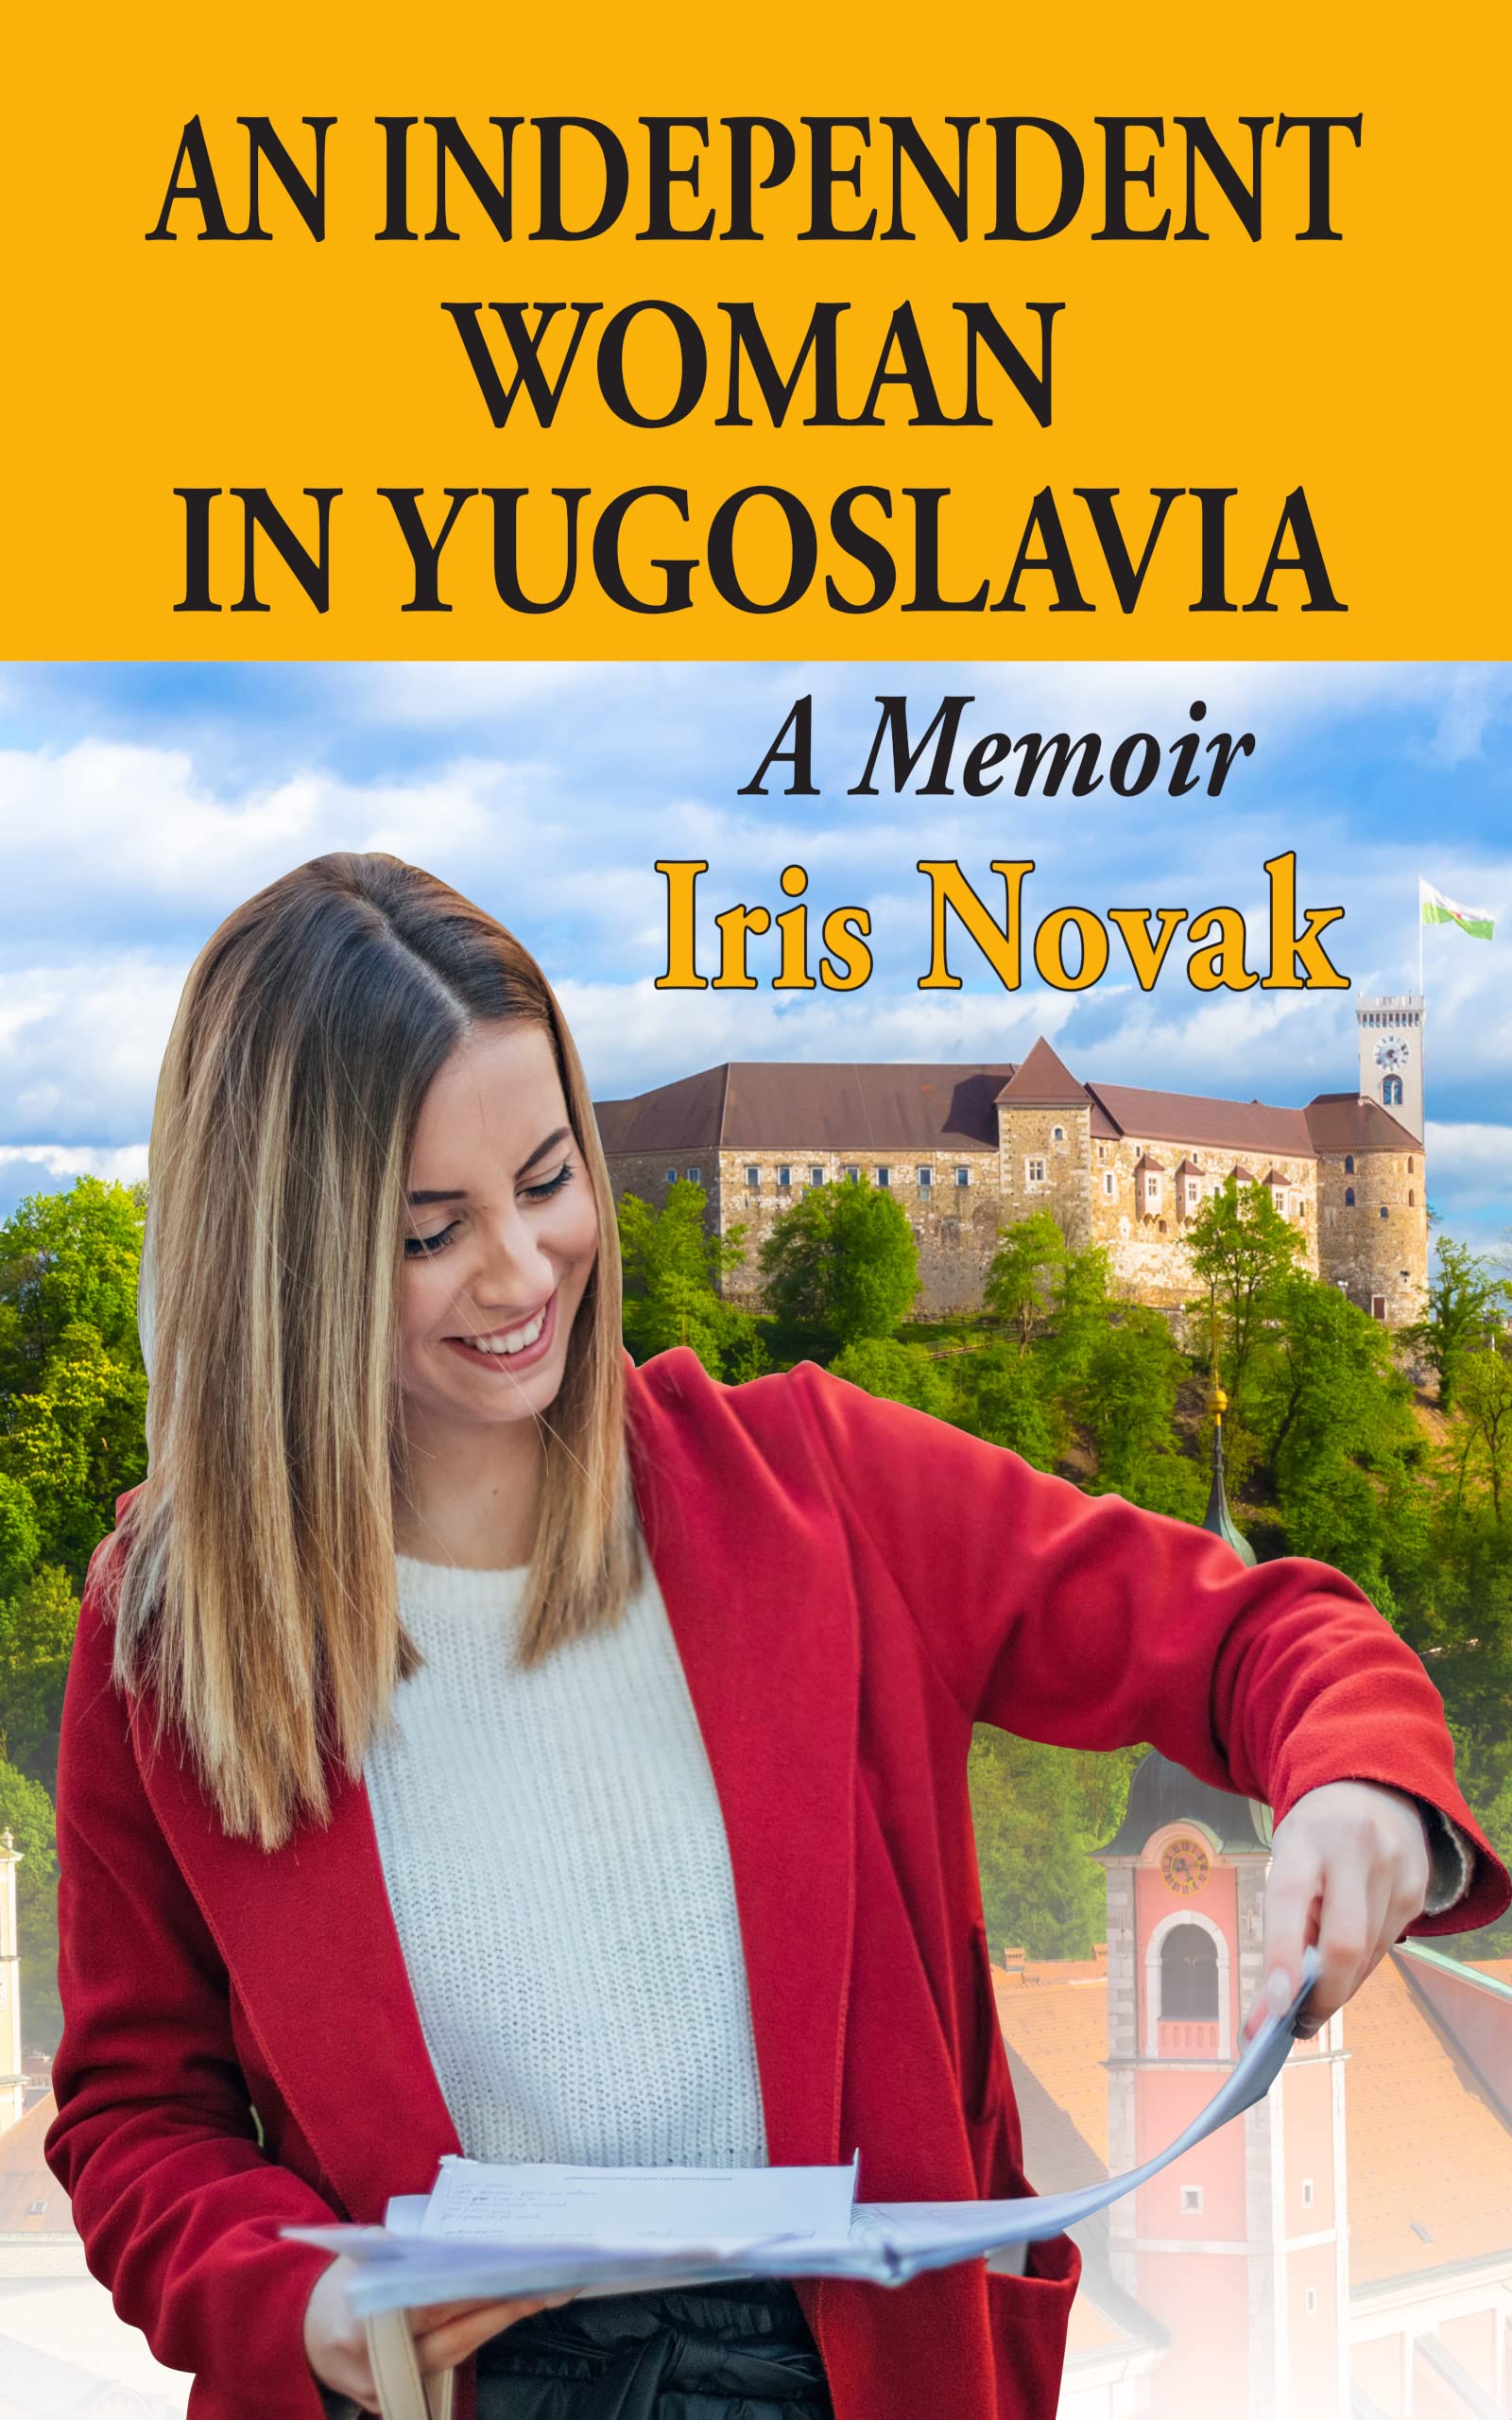 An Independent Woman in Yugoslavia by Iris Novak